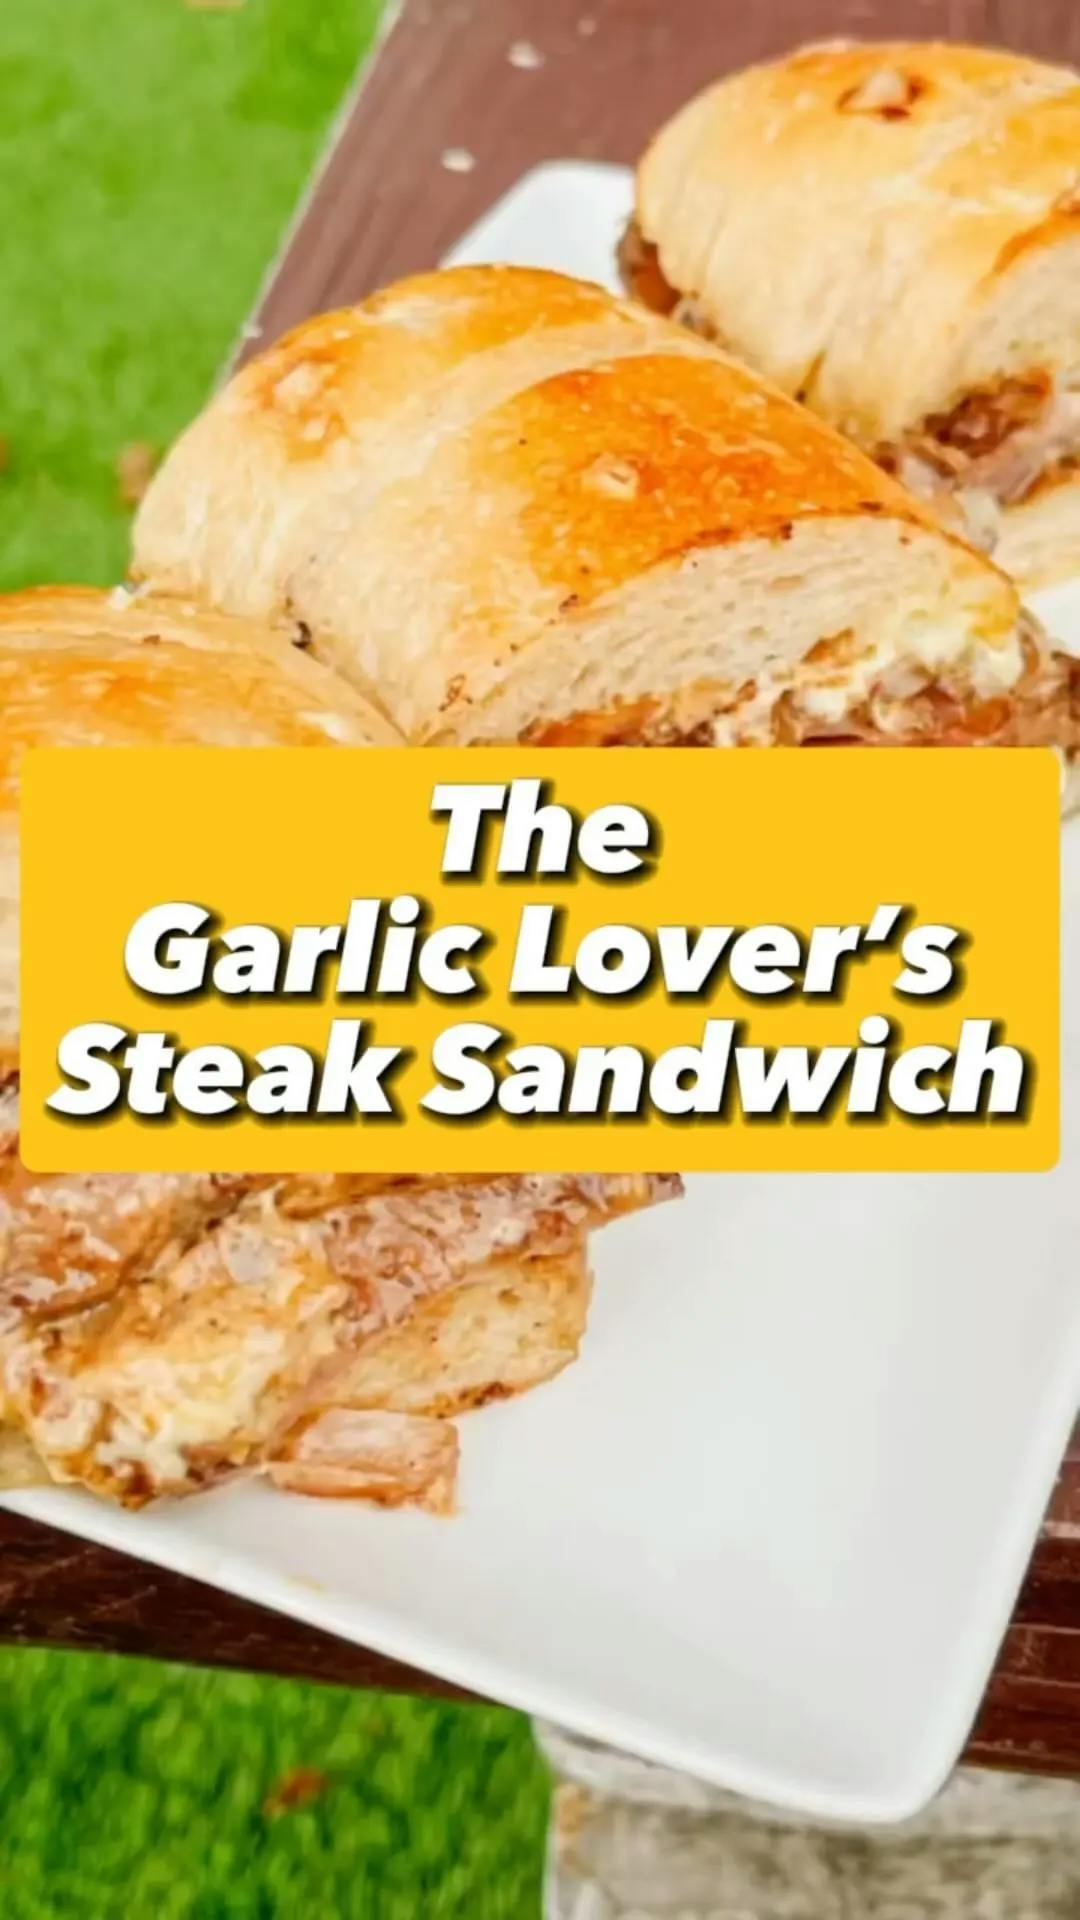 Picture for THE GARLIC LOVER’S STEAK SANDWICH